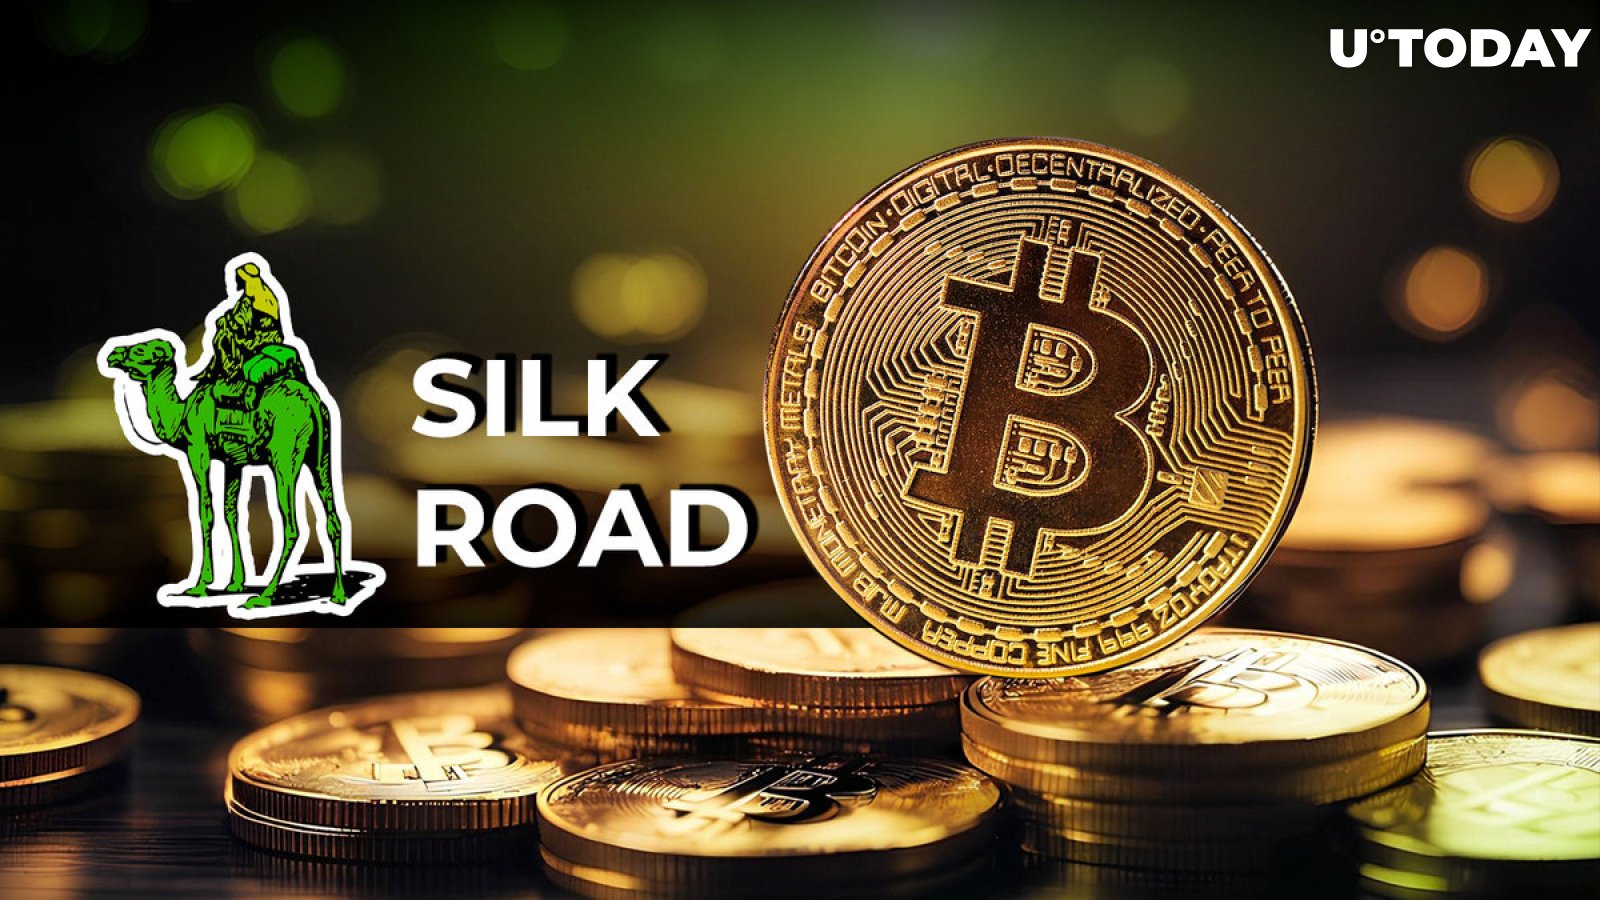 Silk Road Bitcoin on Move Again: Details